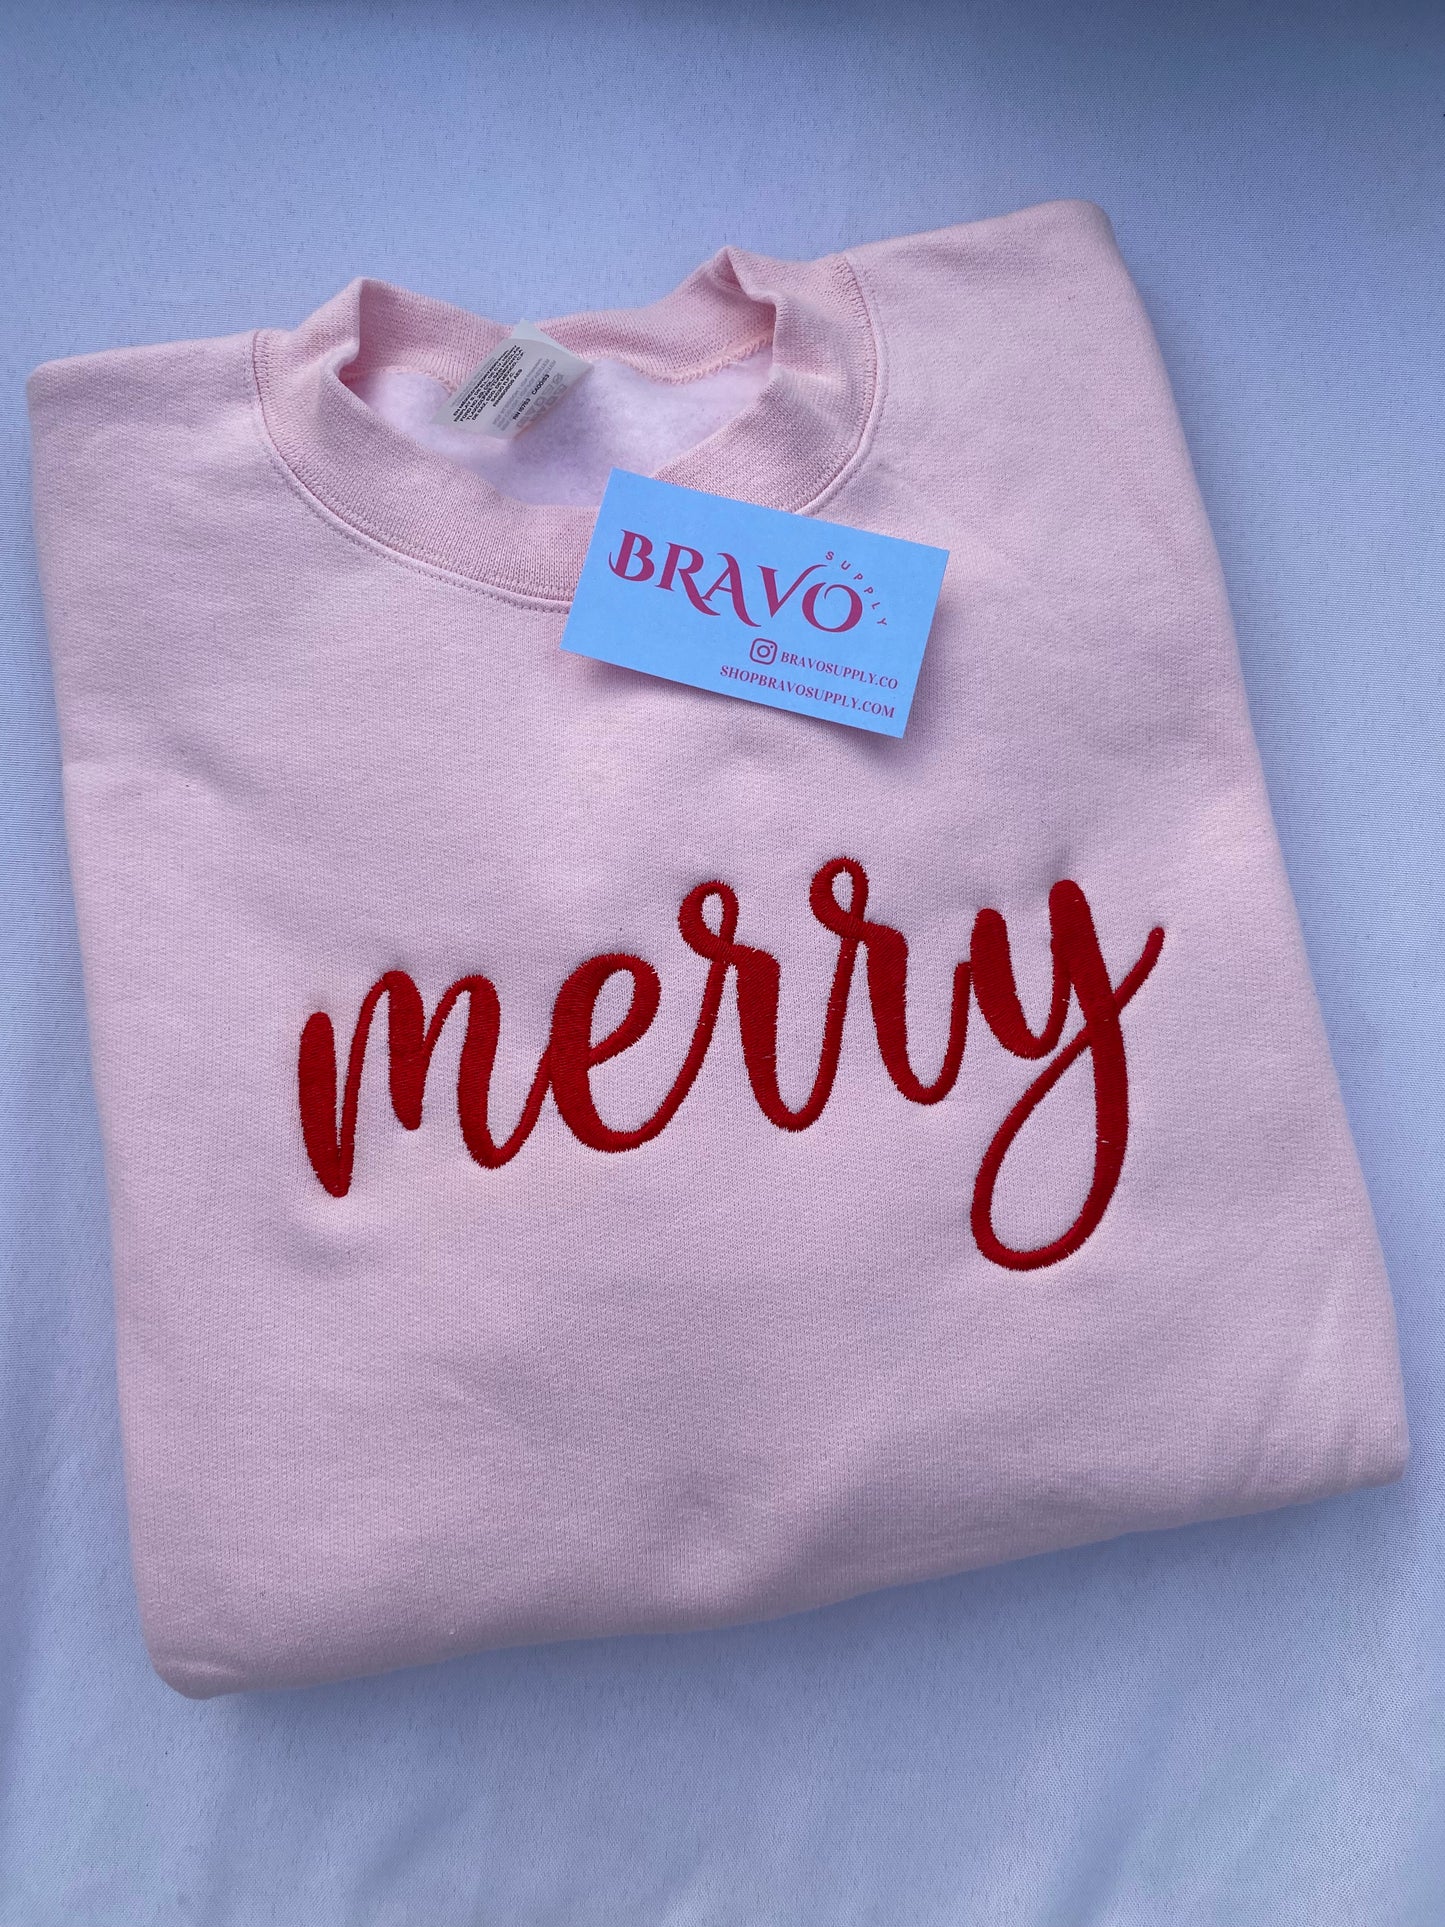 Merry embroidered sweatshirt